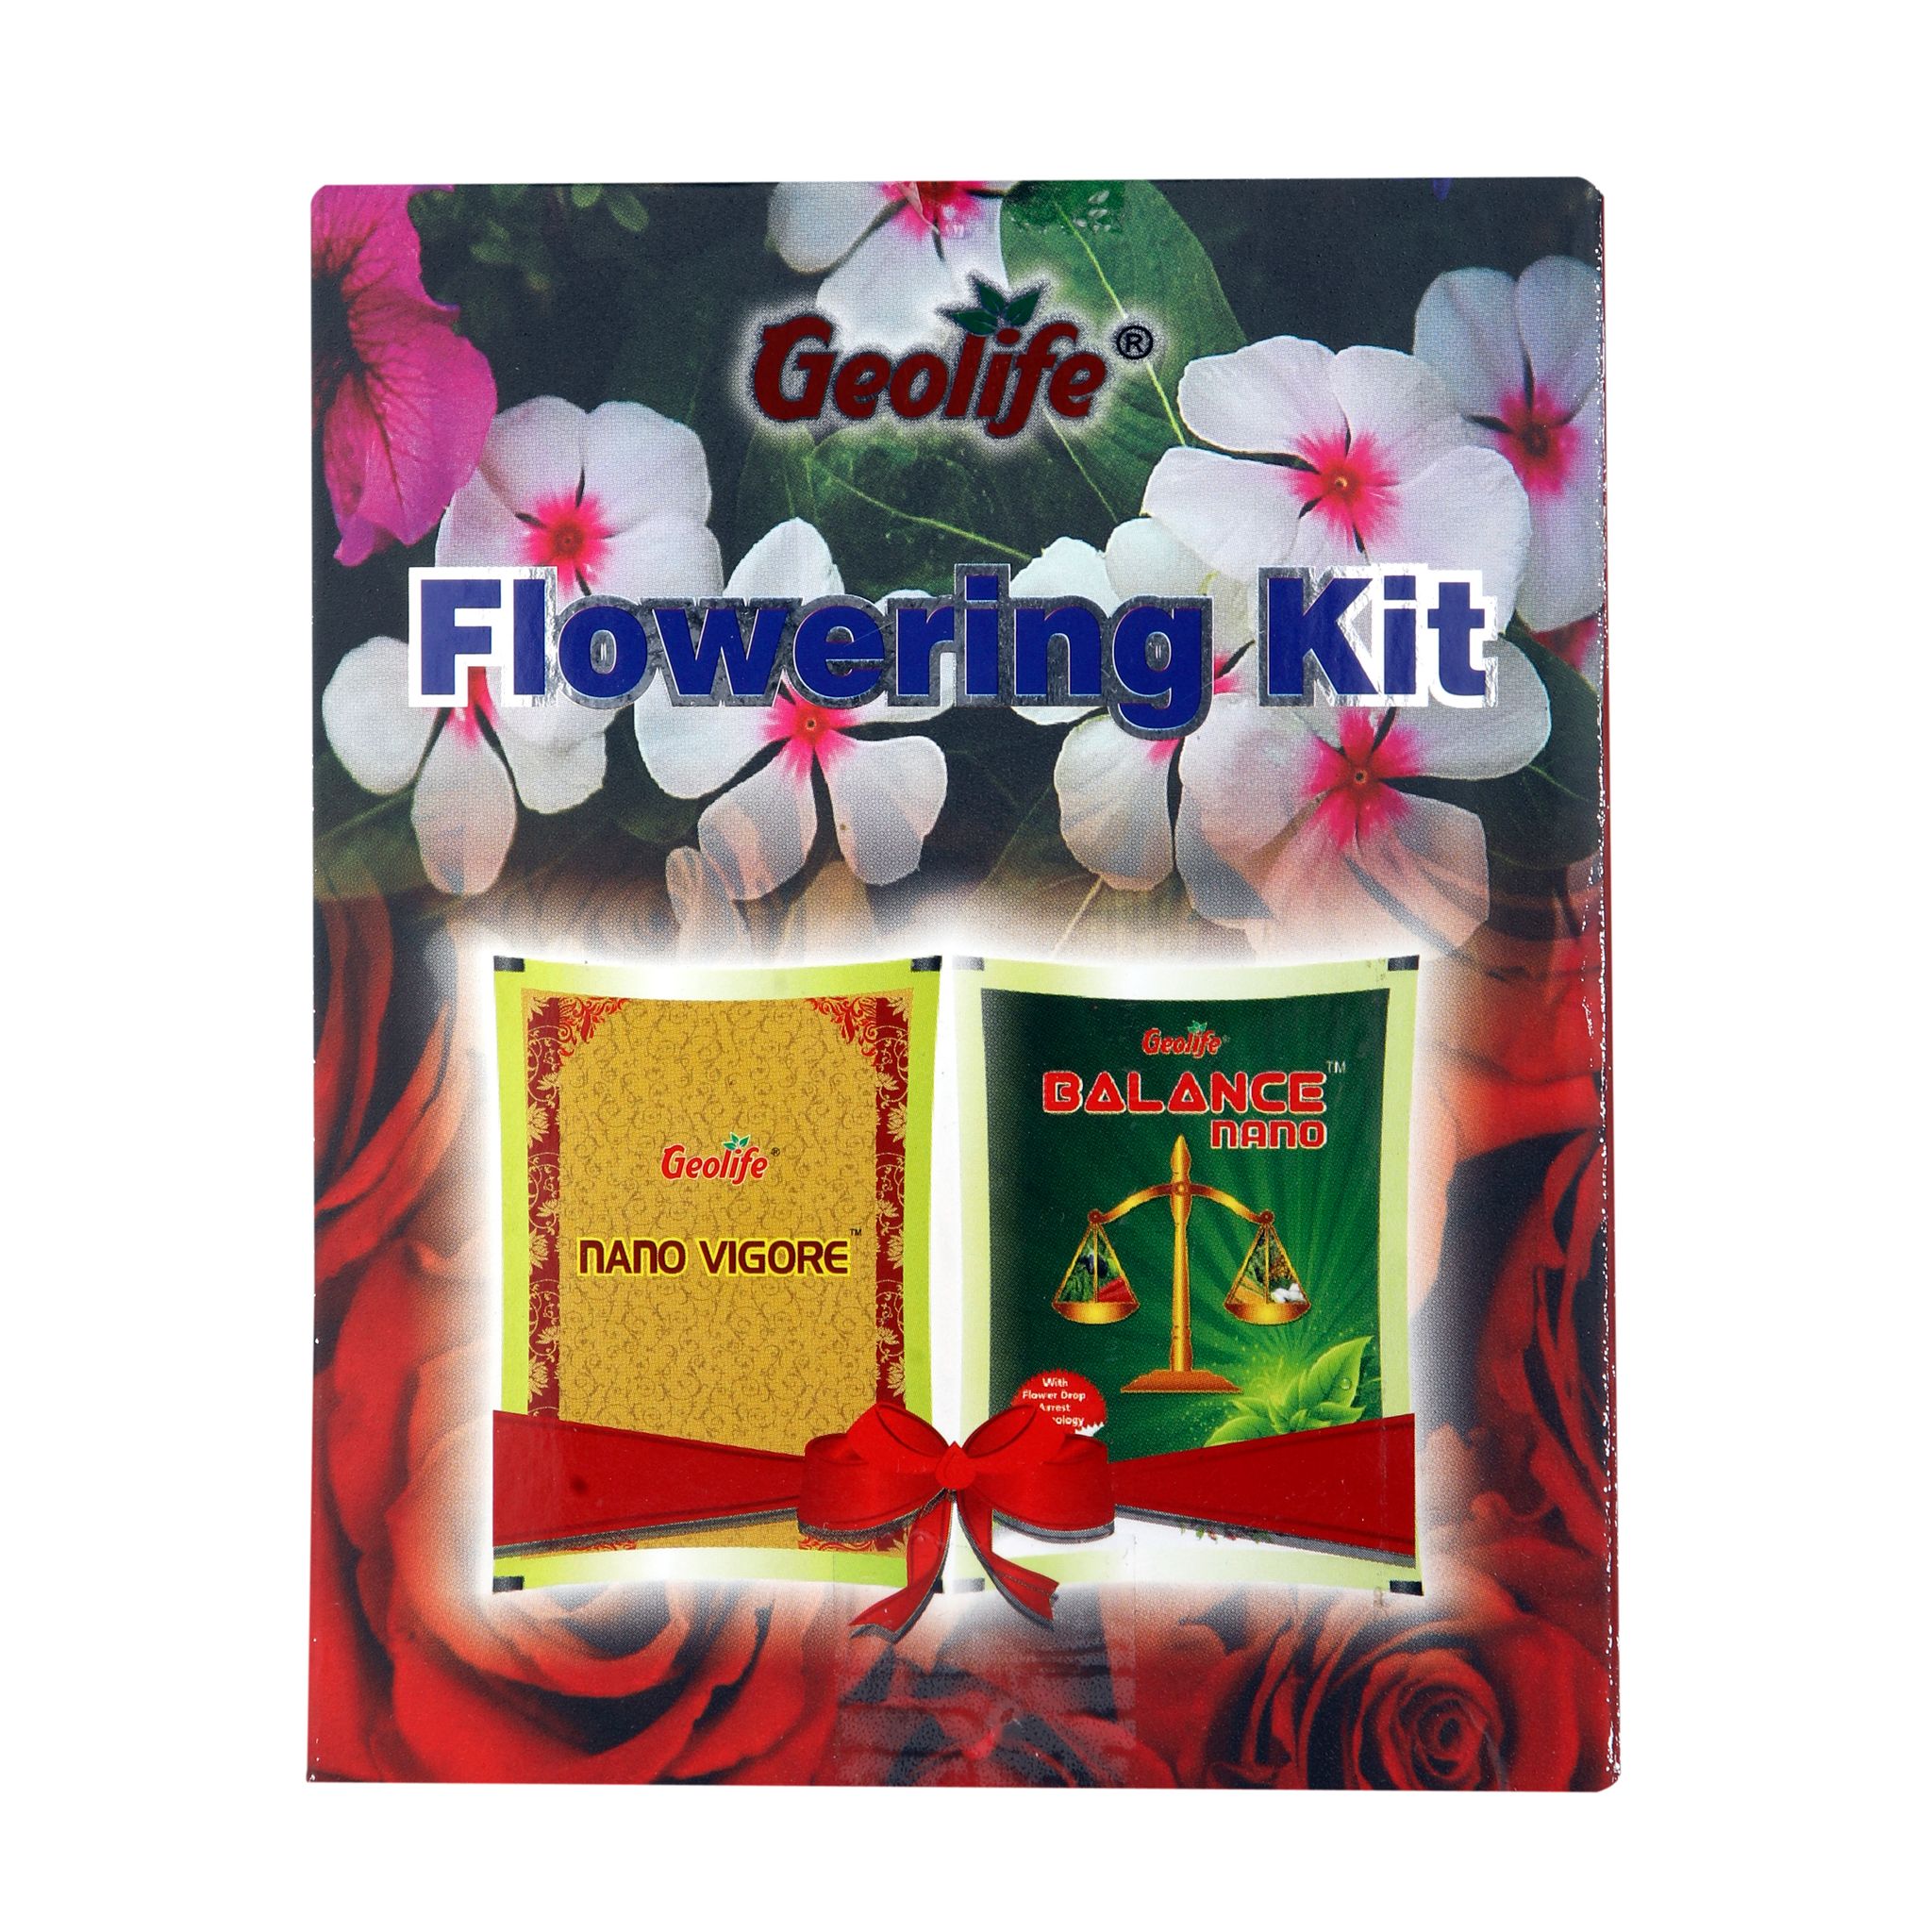 Geolife Flowering Kit 51 Gm (Nano Vigore 1 Gm + Balance Nano 50 Gm)